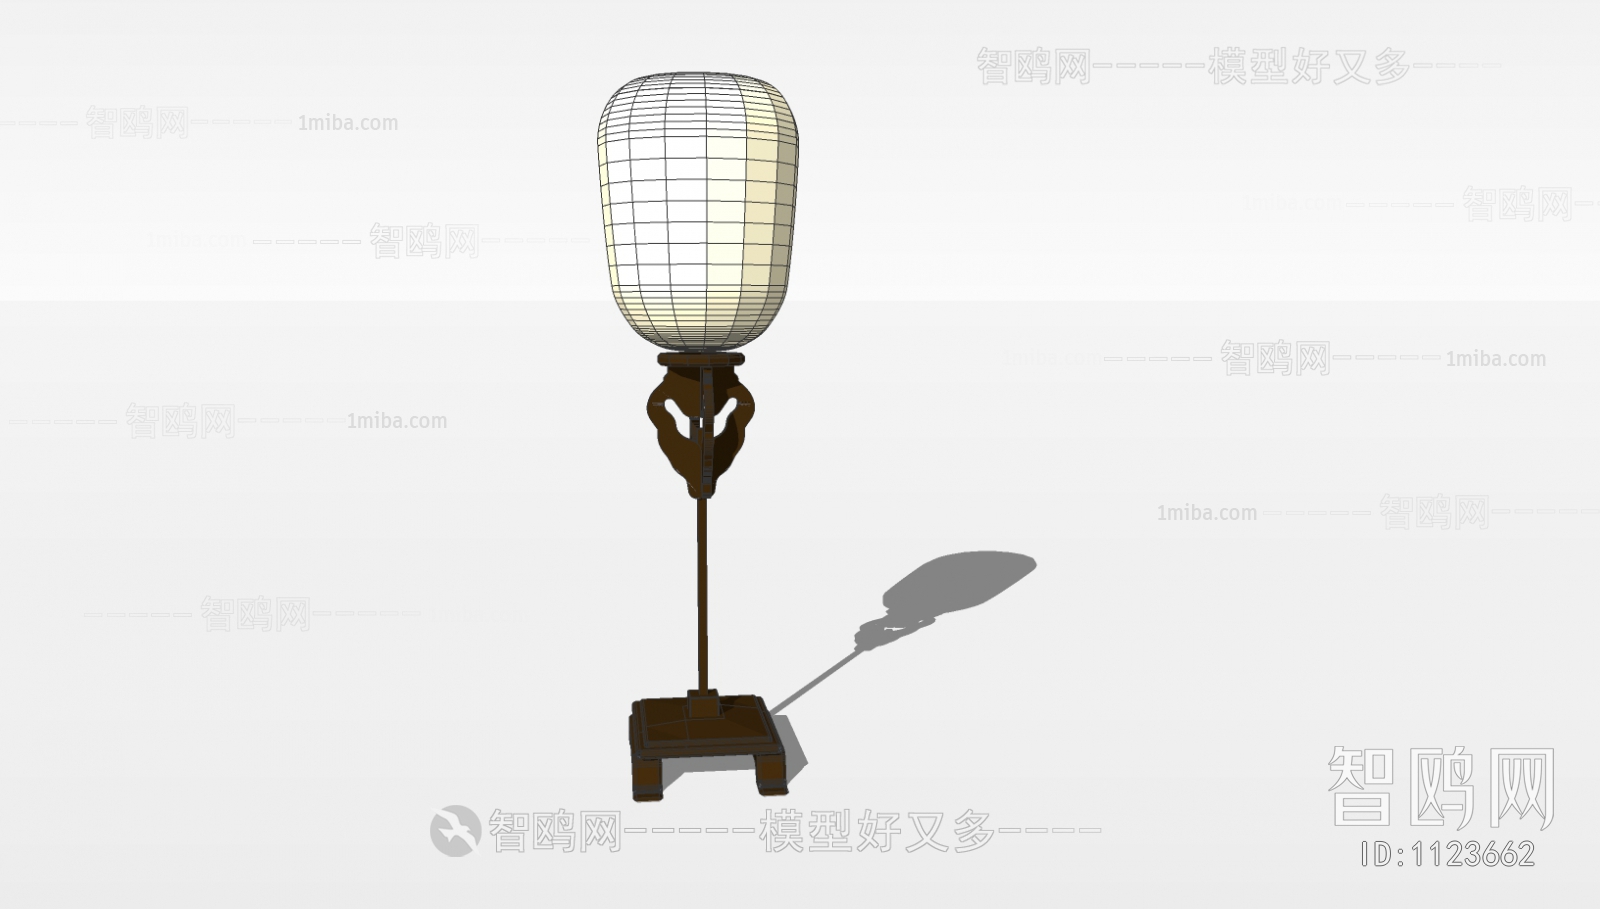 Modern Floor Lamp